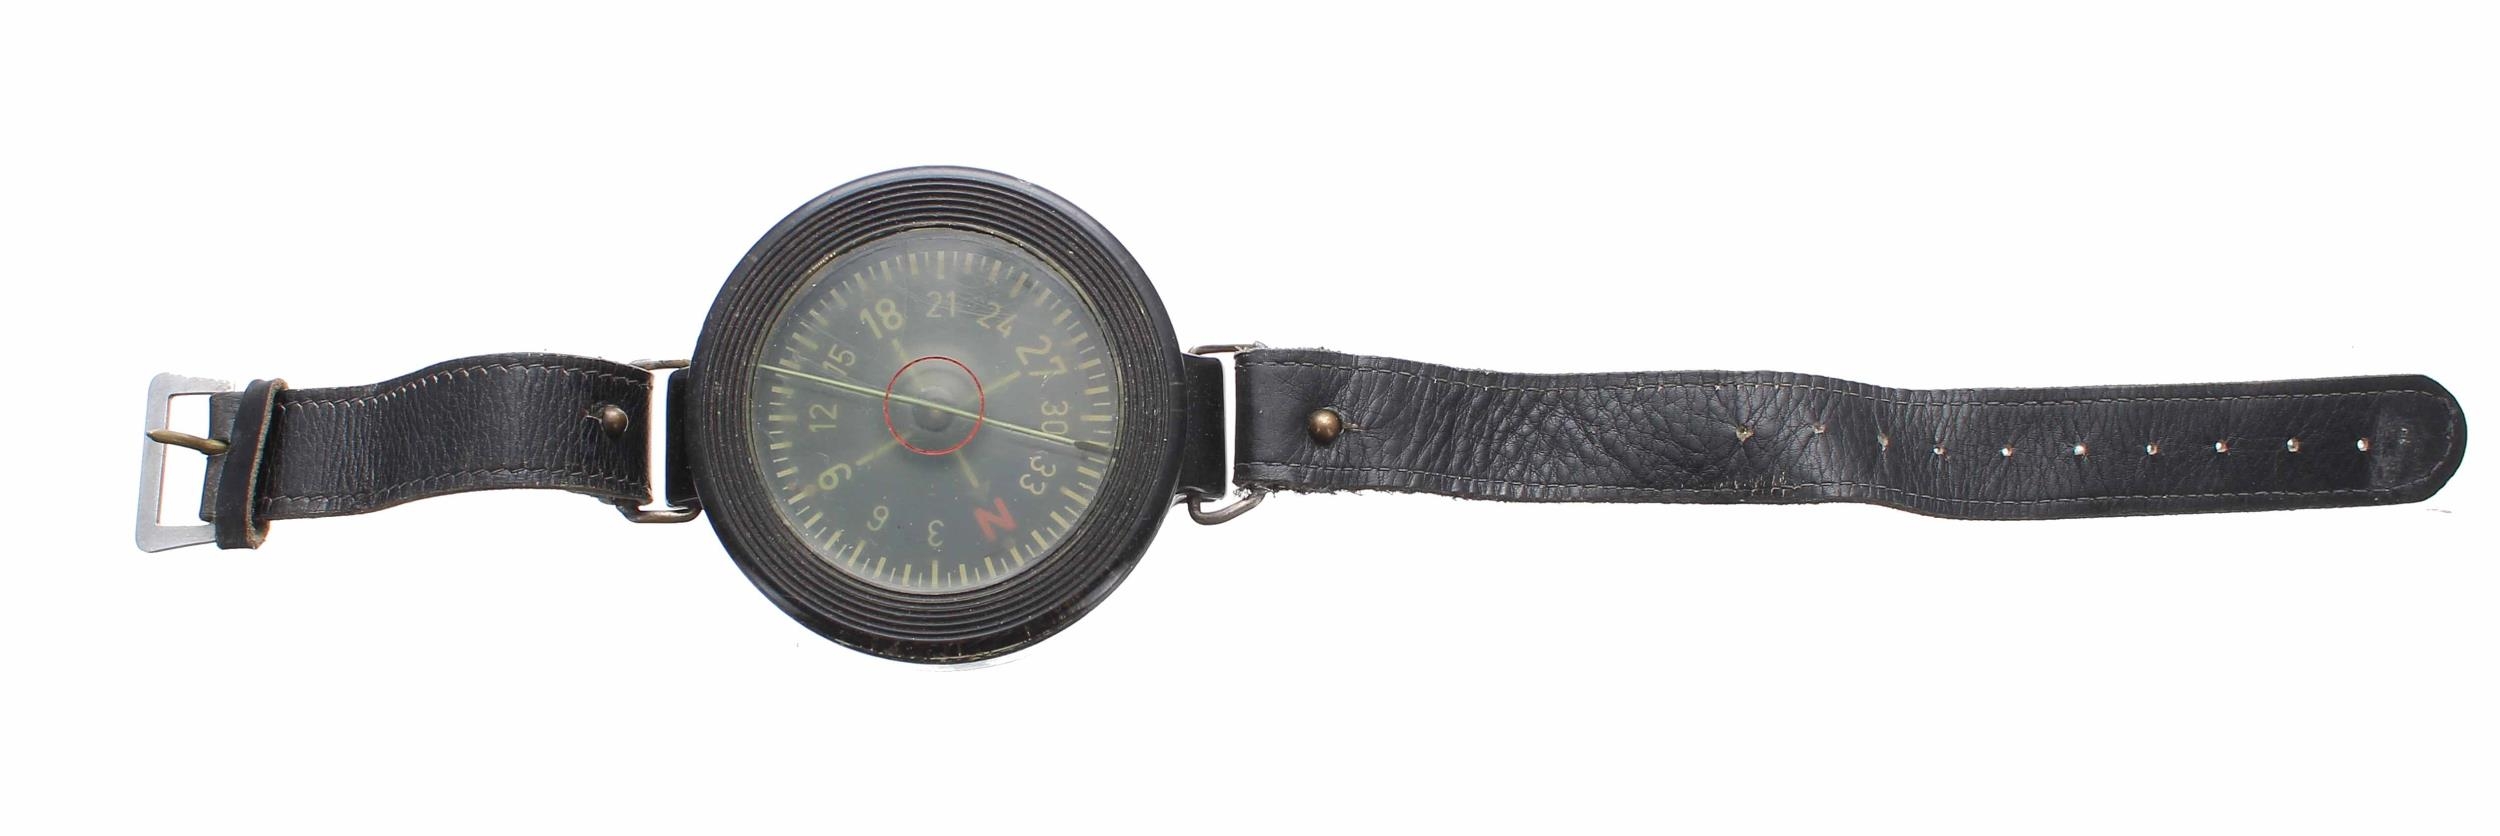 WWII Luftwaffe wrist compass on a leather strap, stamped AK 39 FI 23235-1 6cm diameter